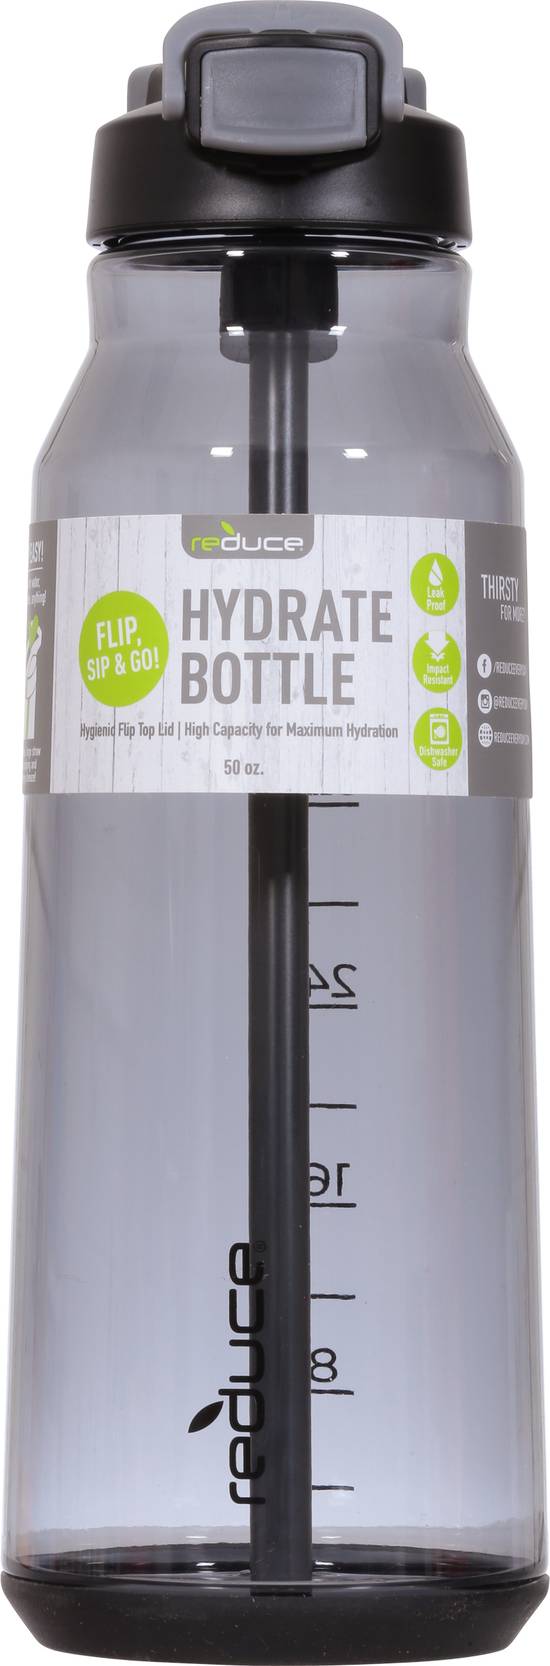 Reduce Hydrate Bottle 50 oz Capacity (gray)